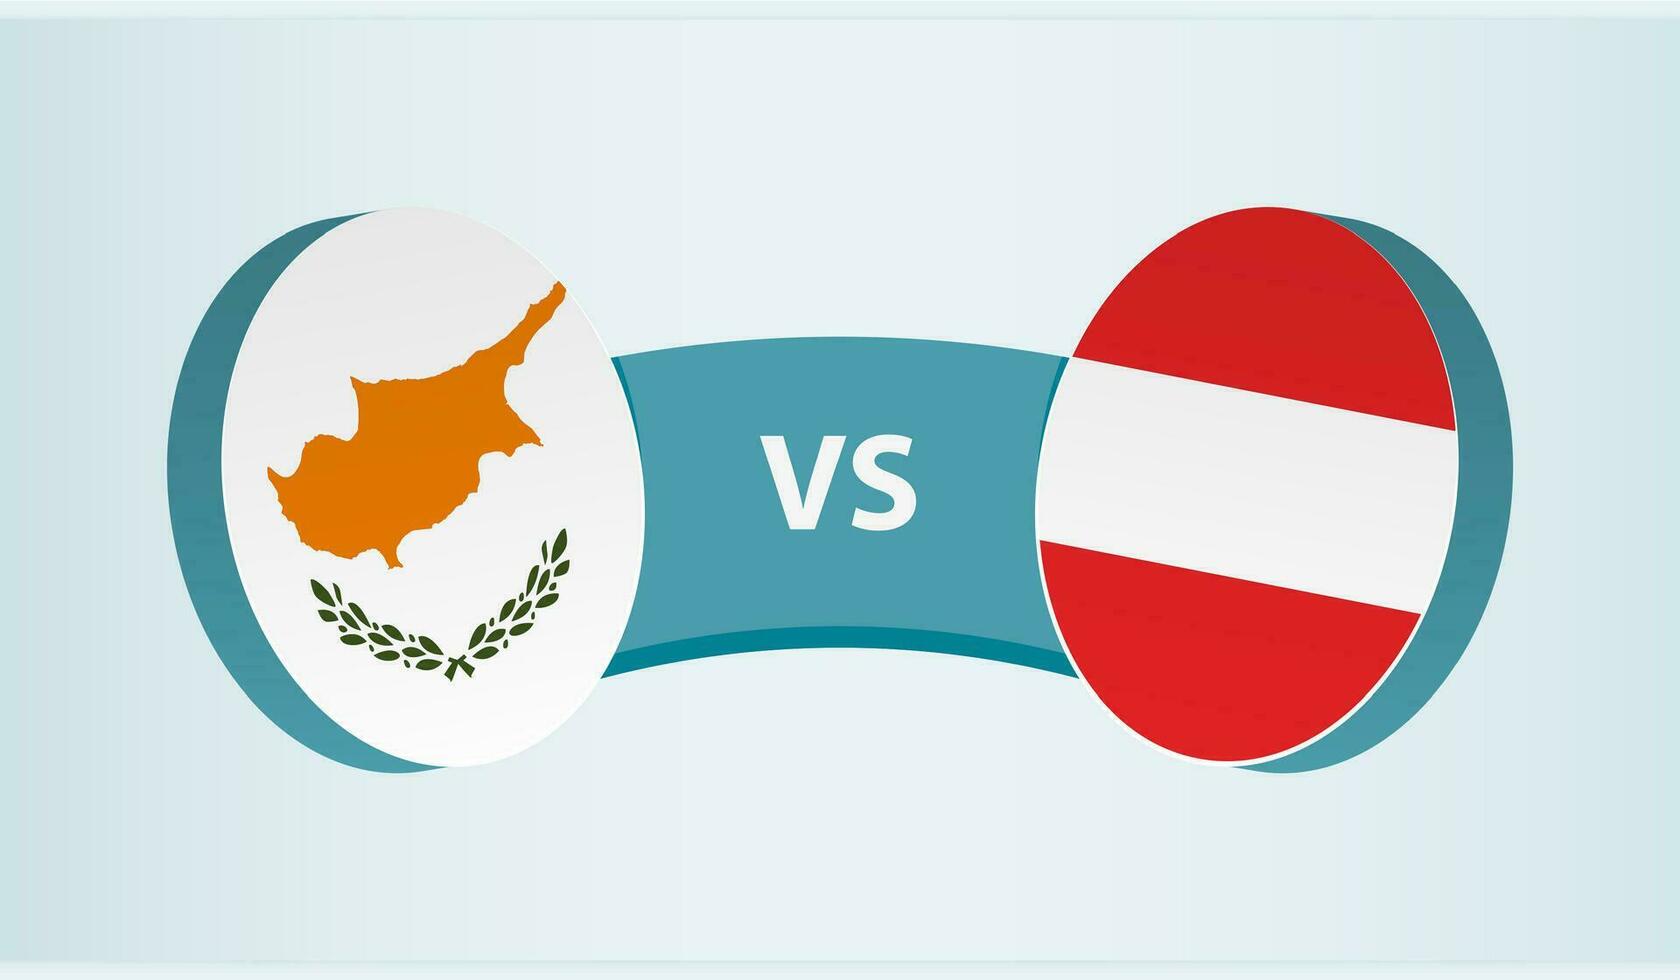 Cyprus versus Austria, team sports competition concept. vector